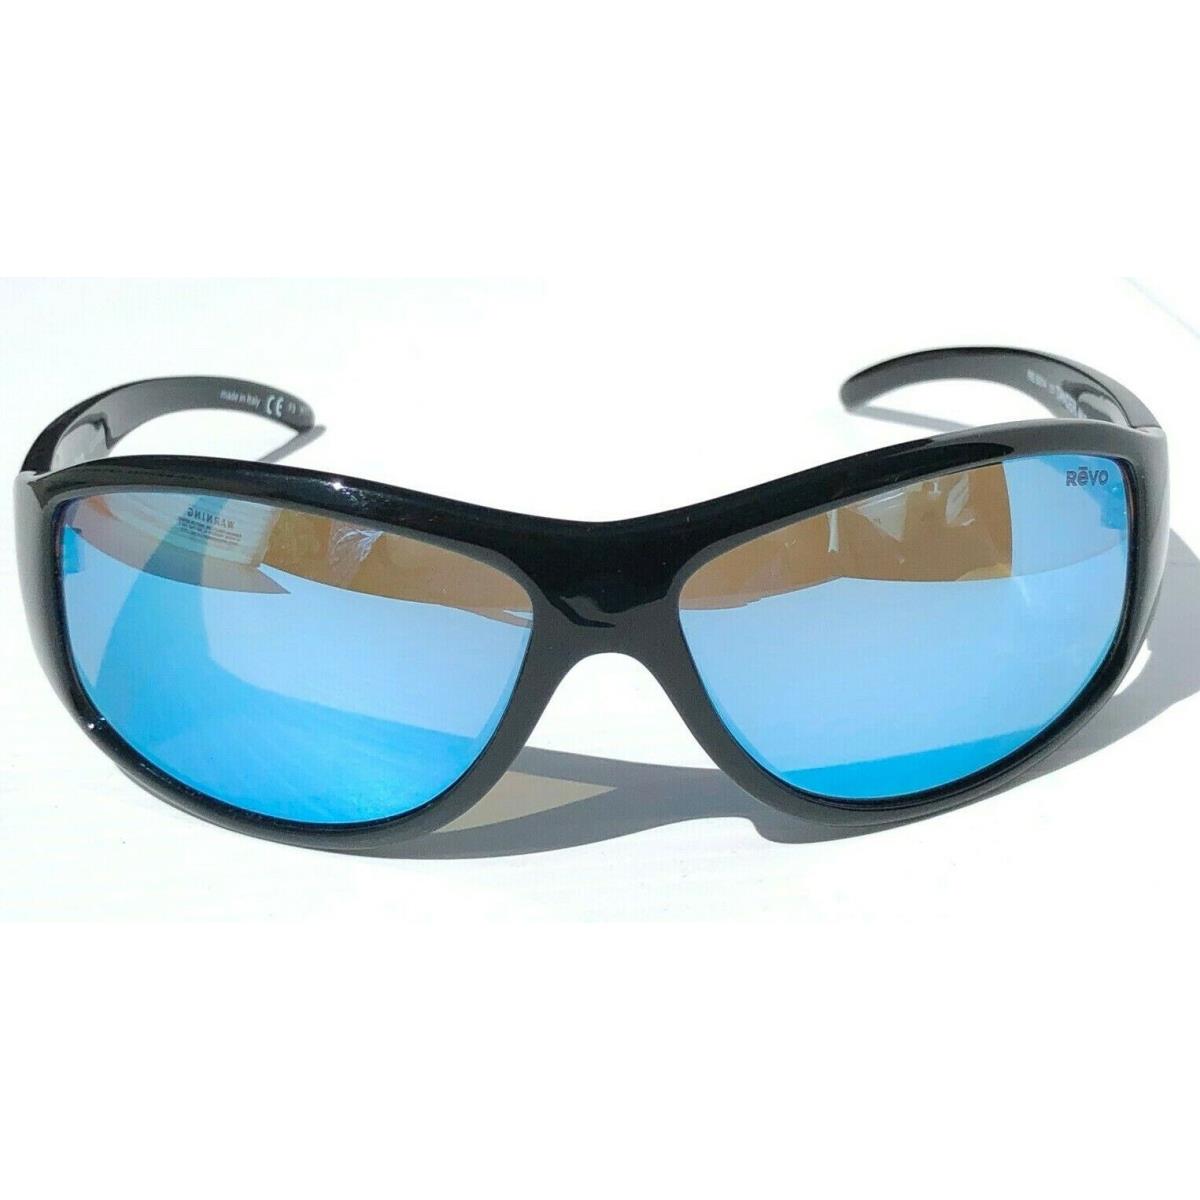 Revo sunglasses Tander - Black Frame, Blue Lens